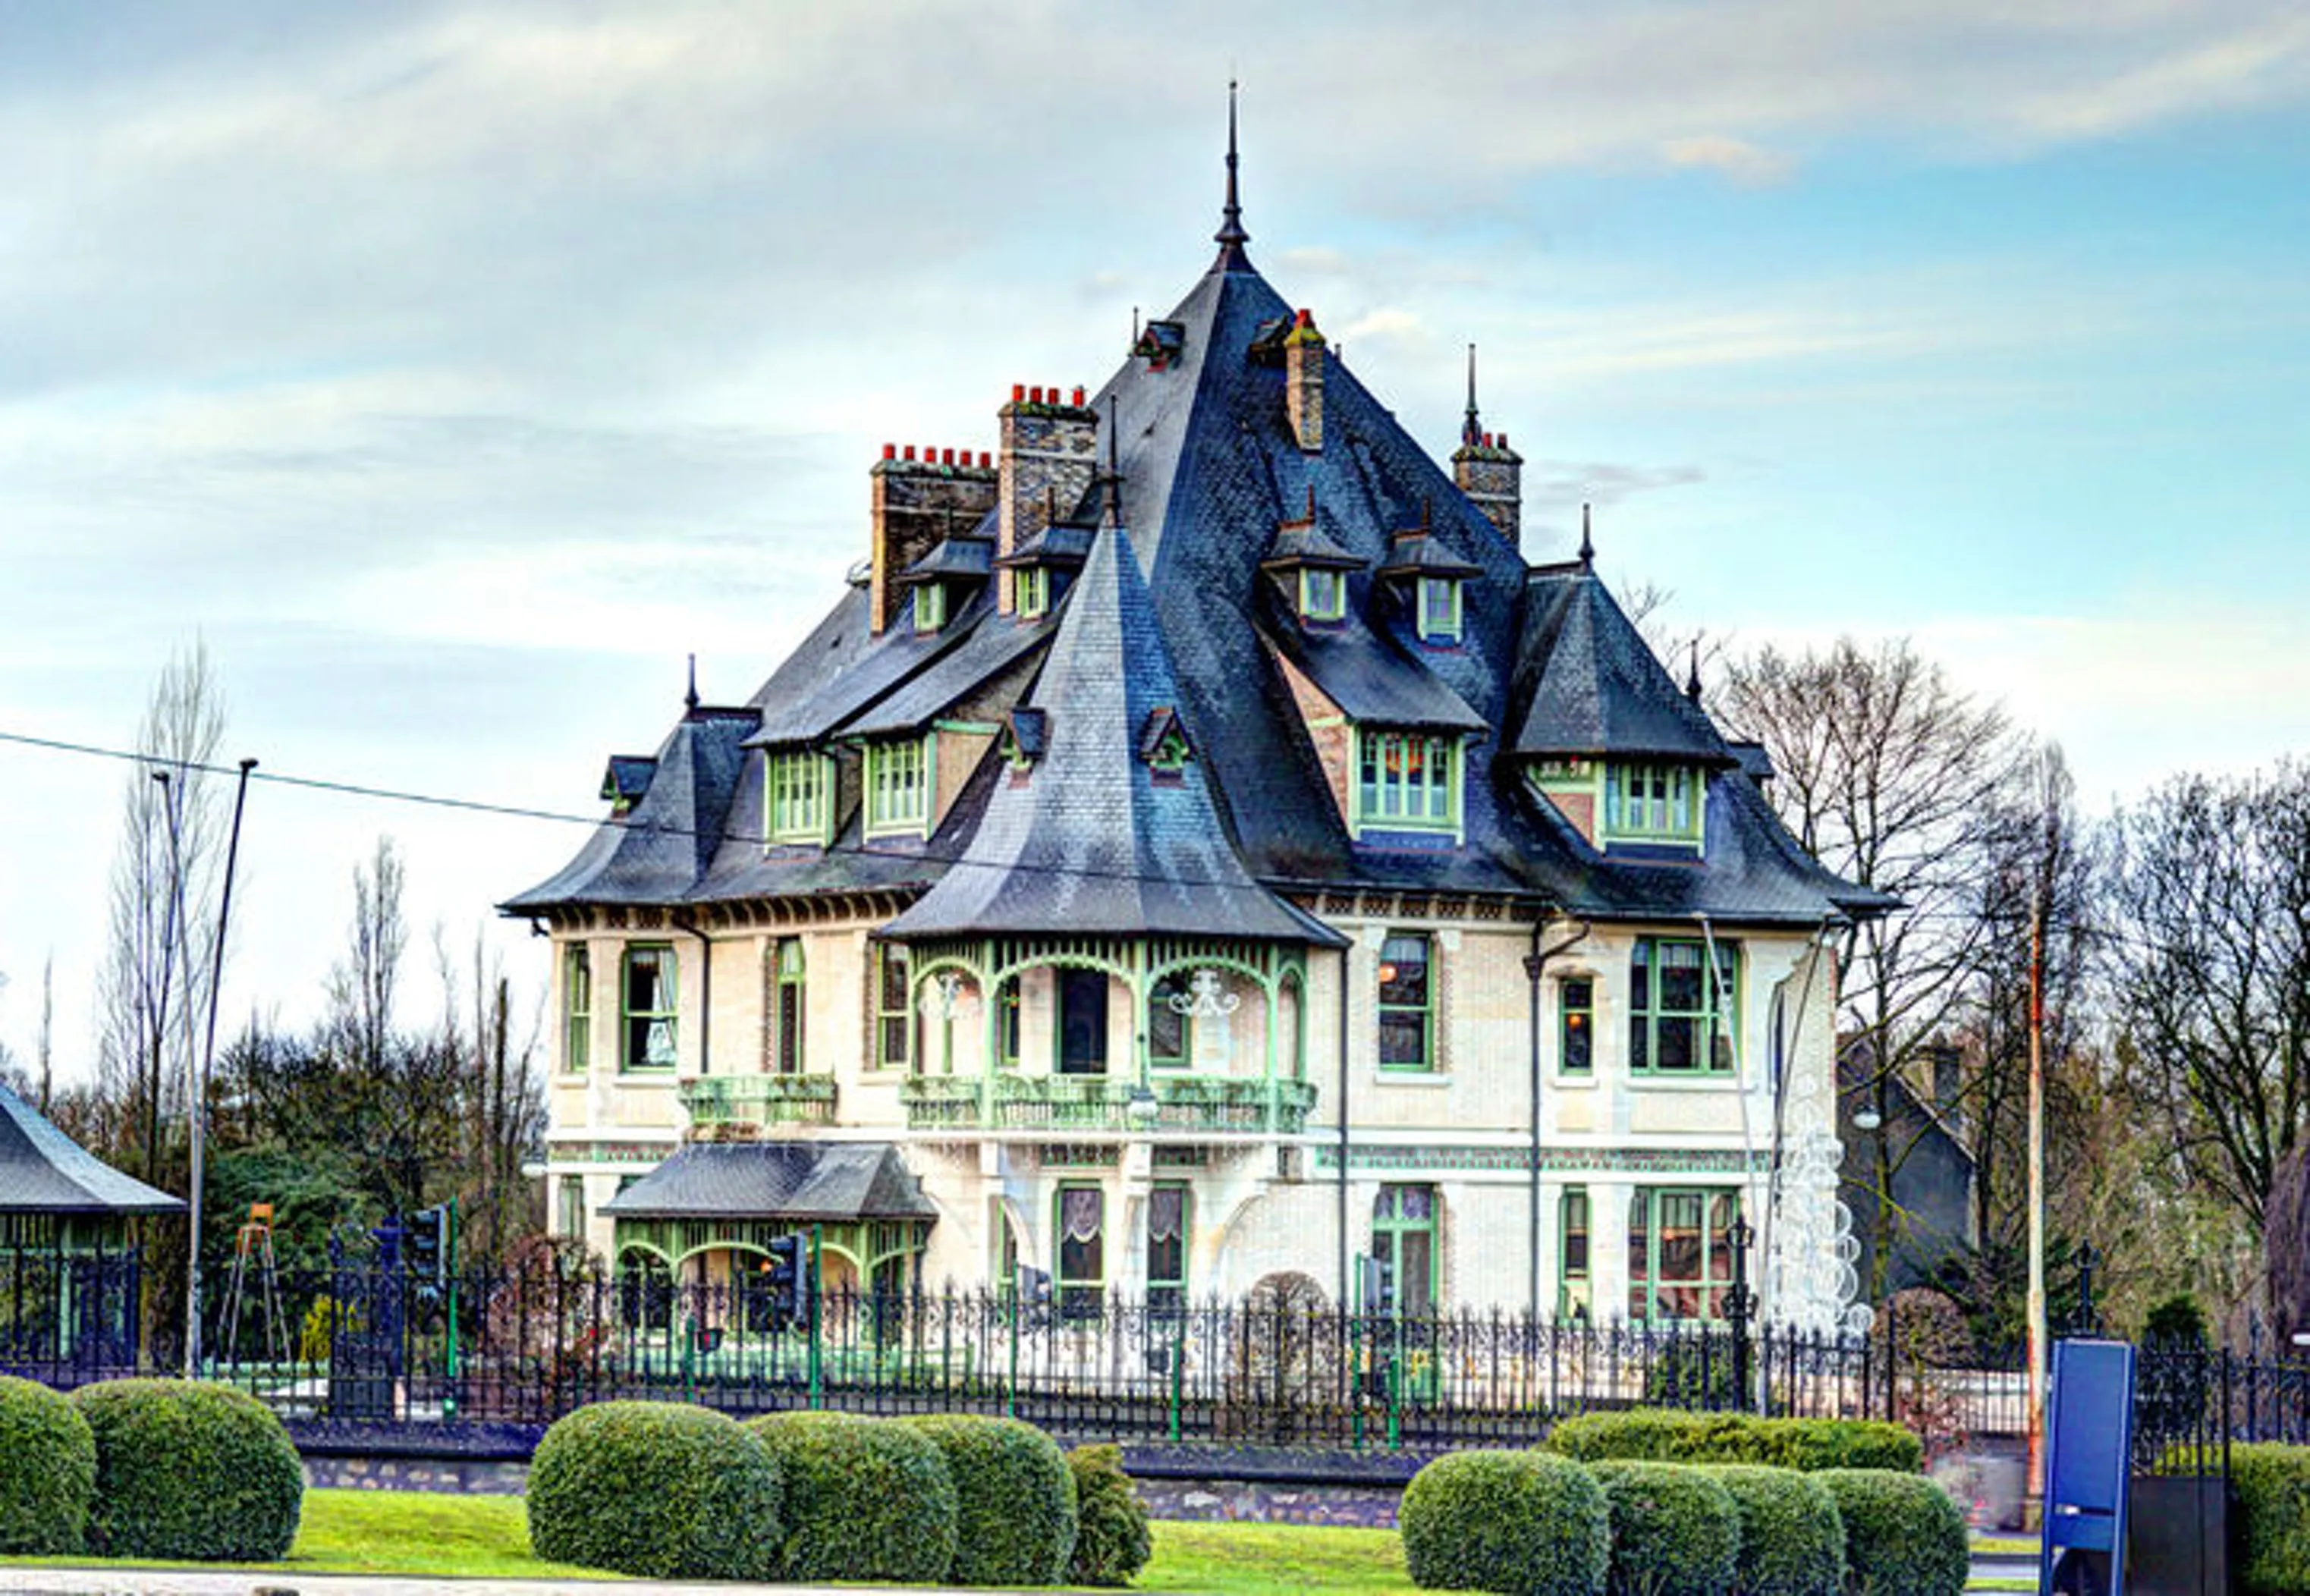 Champagne Vranken - Villa Demoiselle in France, Europe | Architecture - Rated 3.6